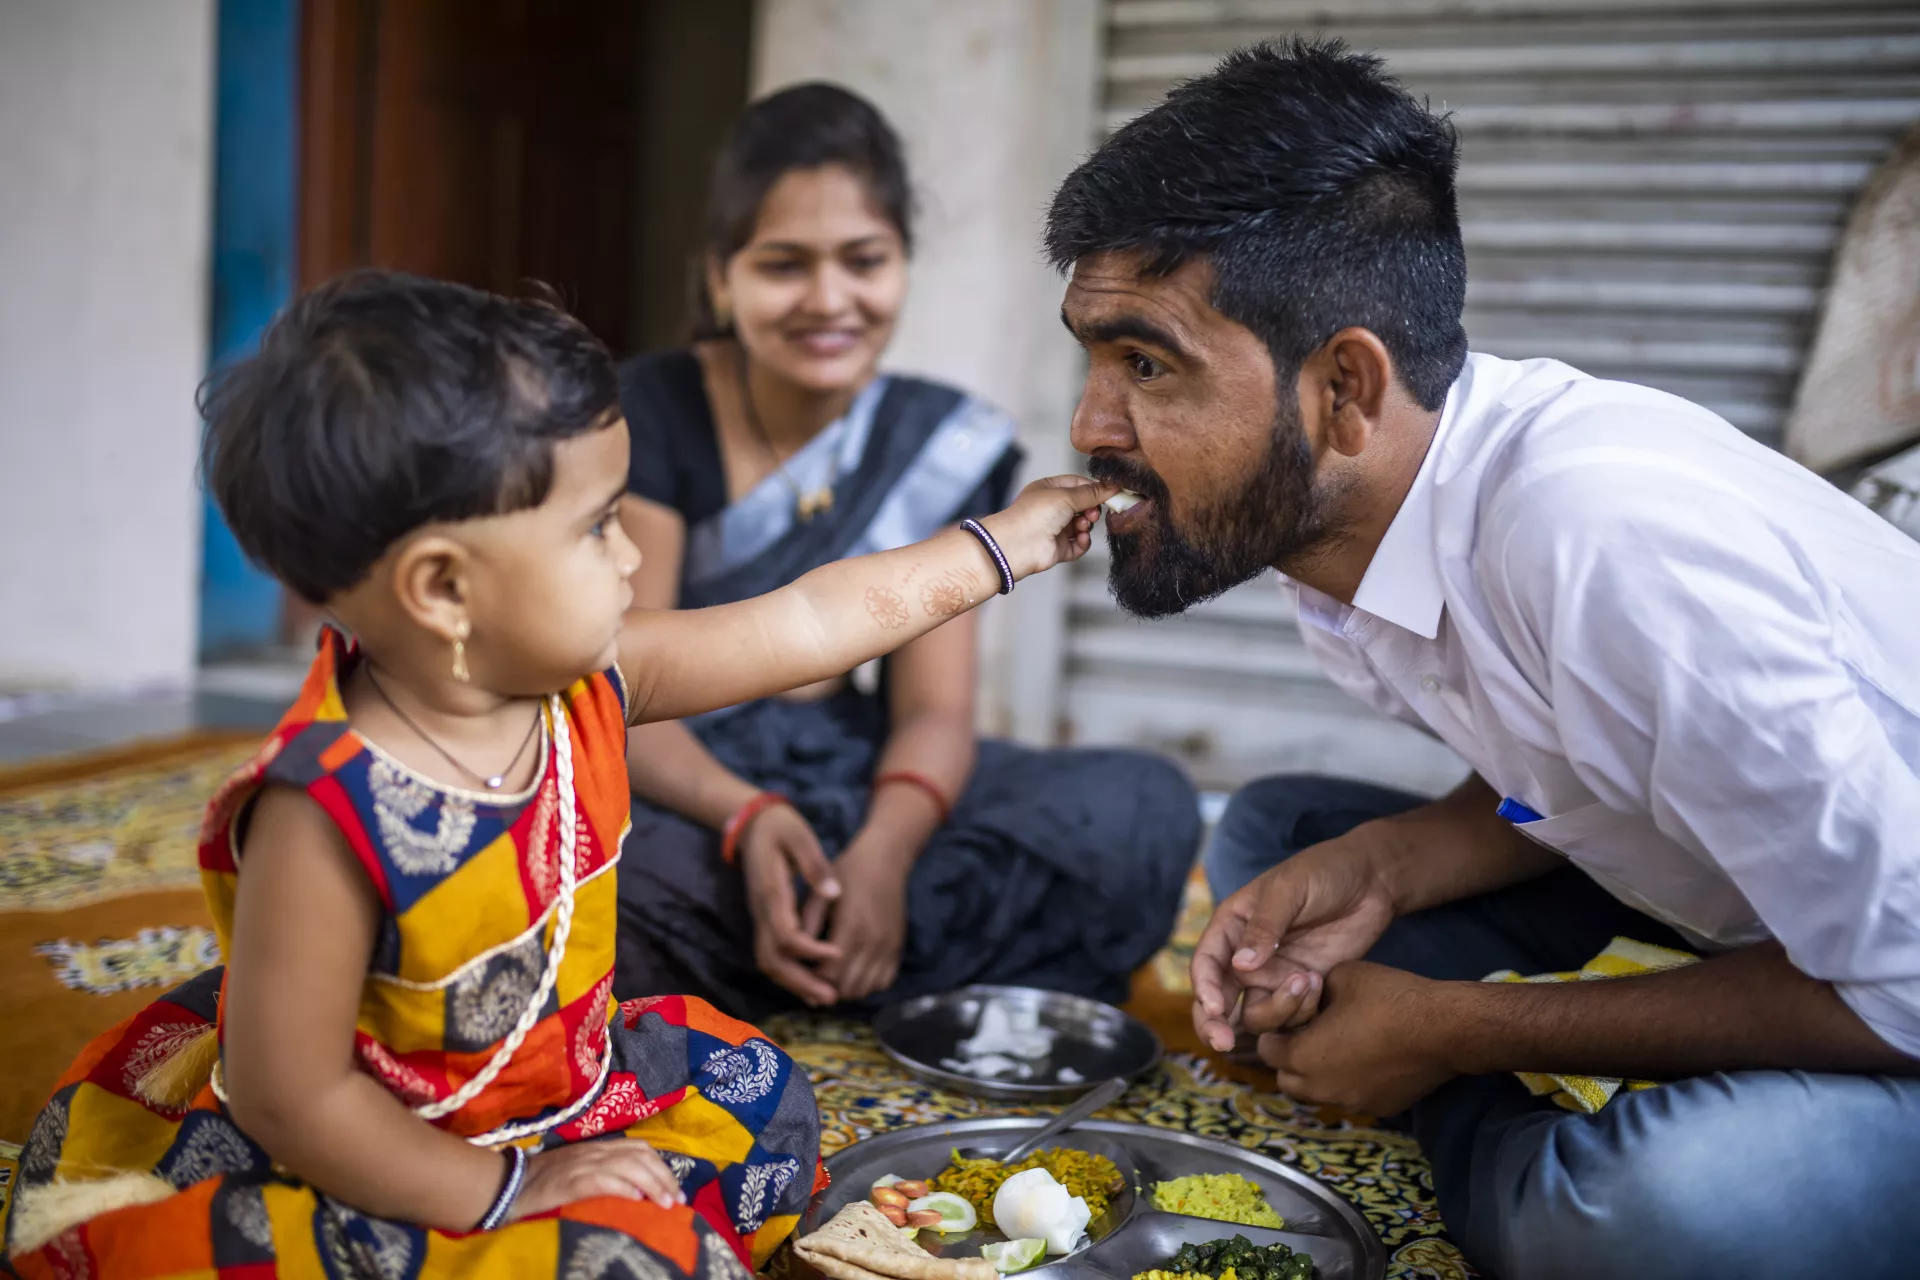 30 years old Yogesh Kulkarni and 23 years old Prateeksha feed nutritious food to their 2 years old daughter at their house in Karmad, Aurangabad.